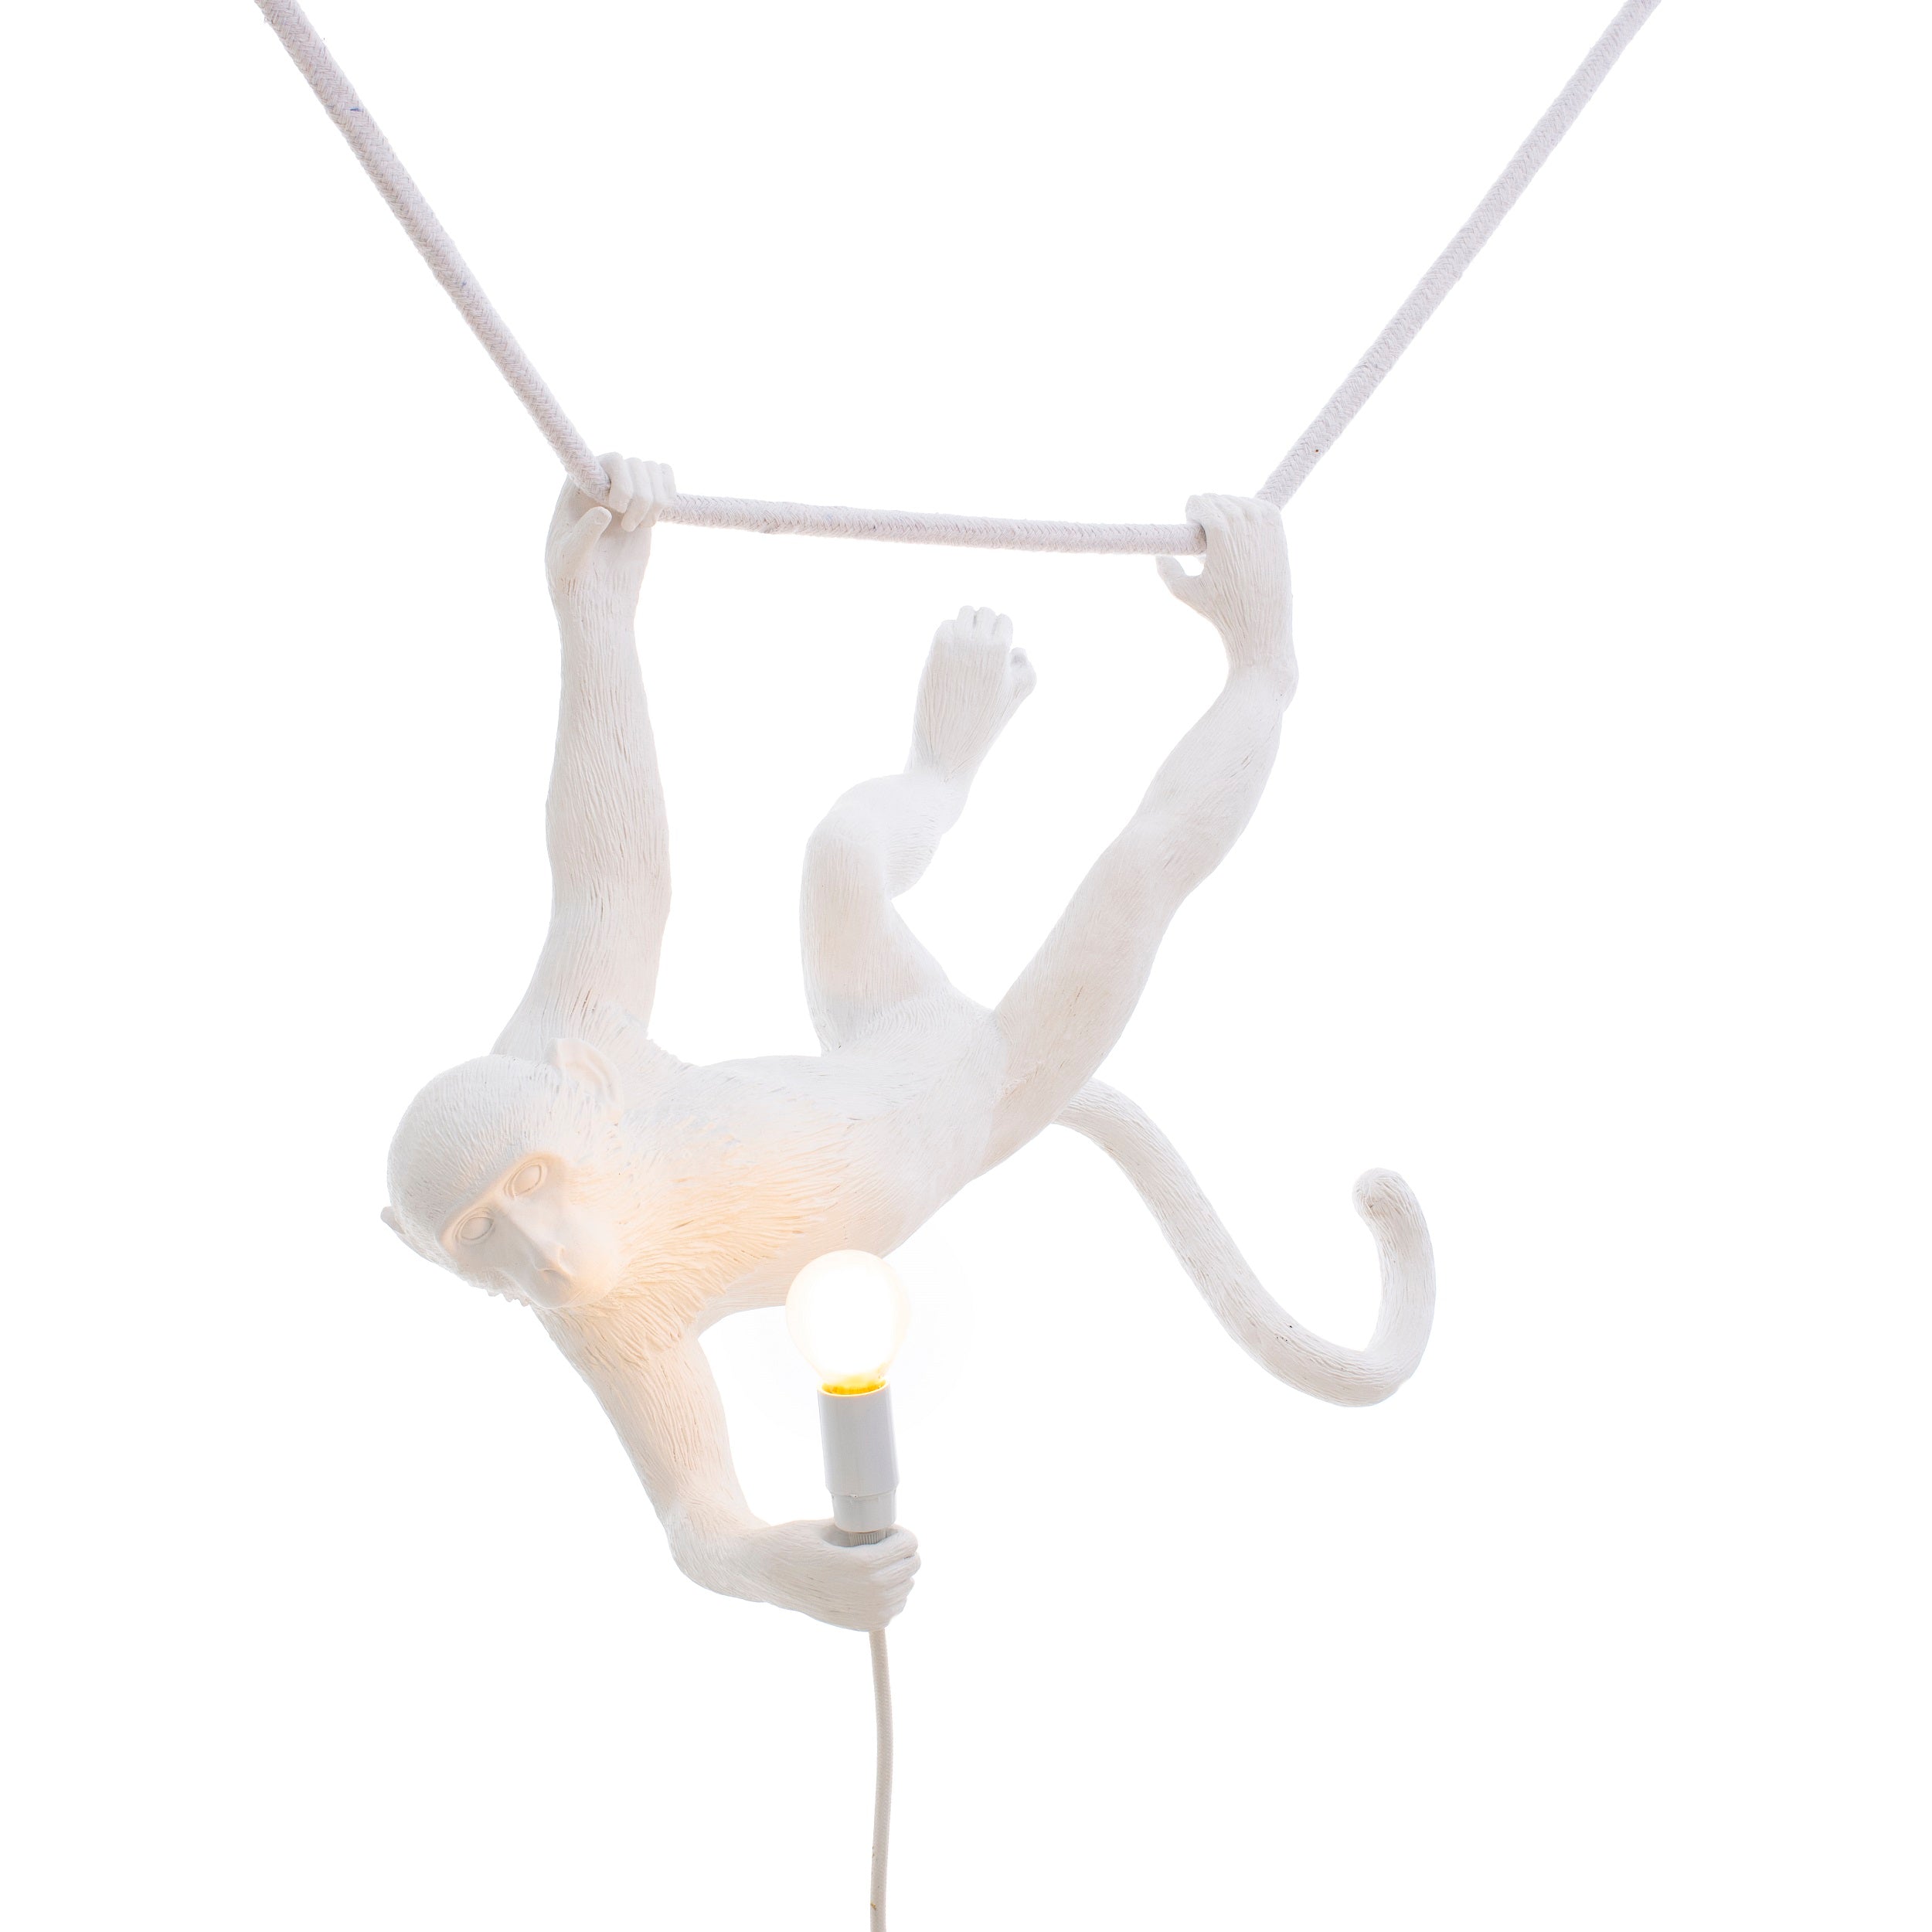 Seletti Monkey Lamp Swing Lampe aus weißem Kunstharz